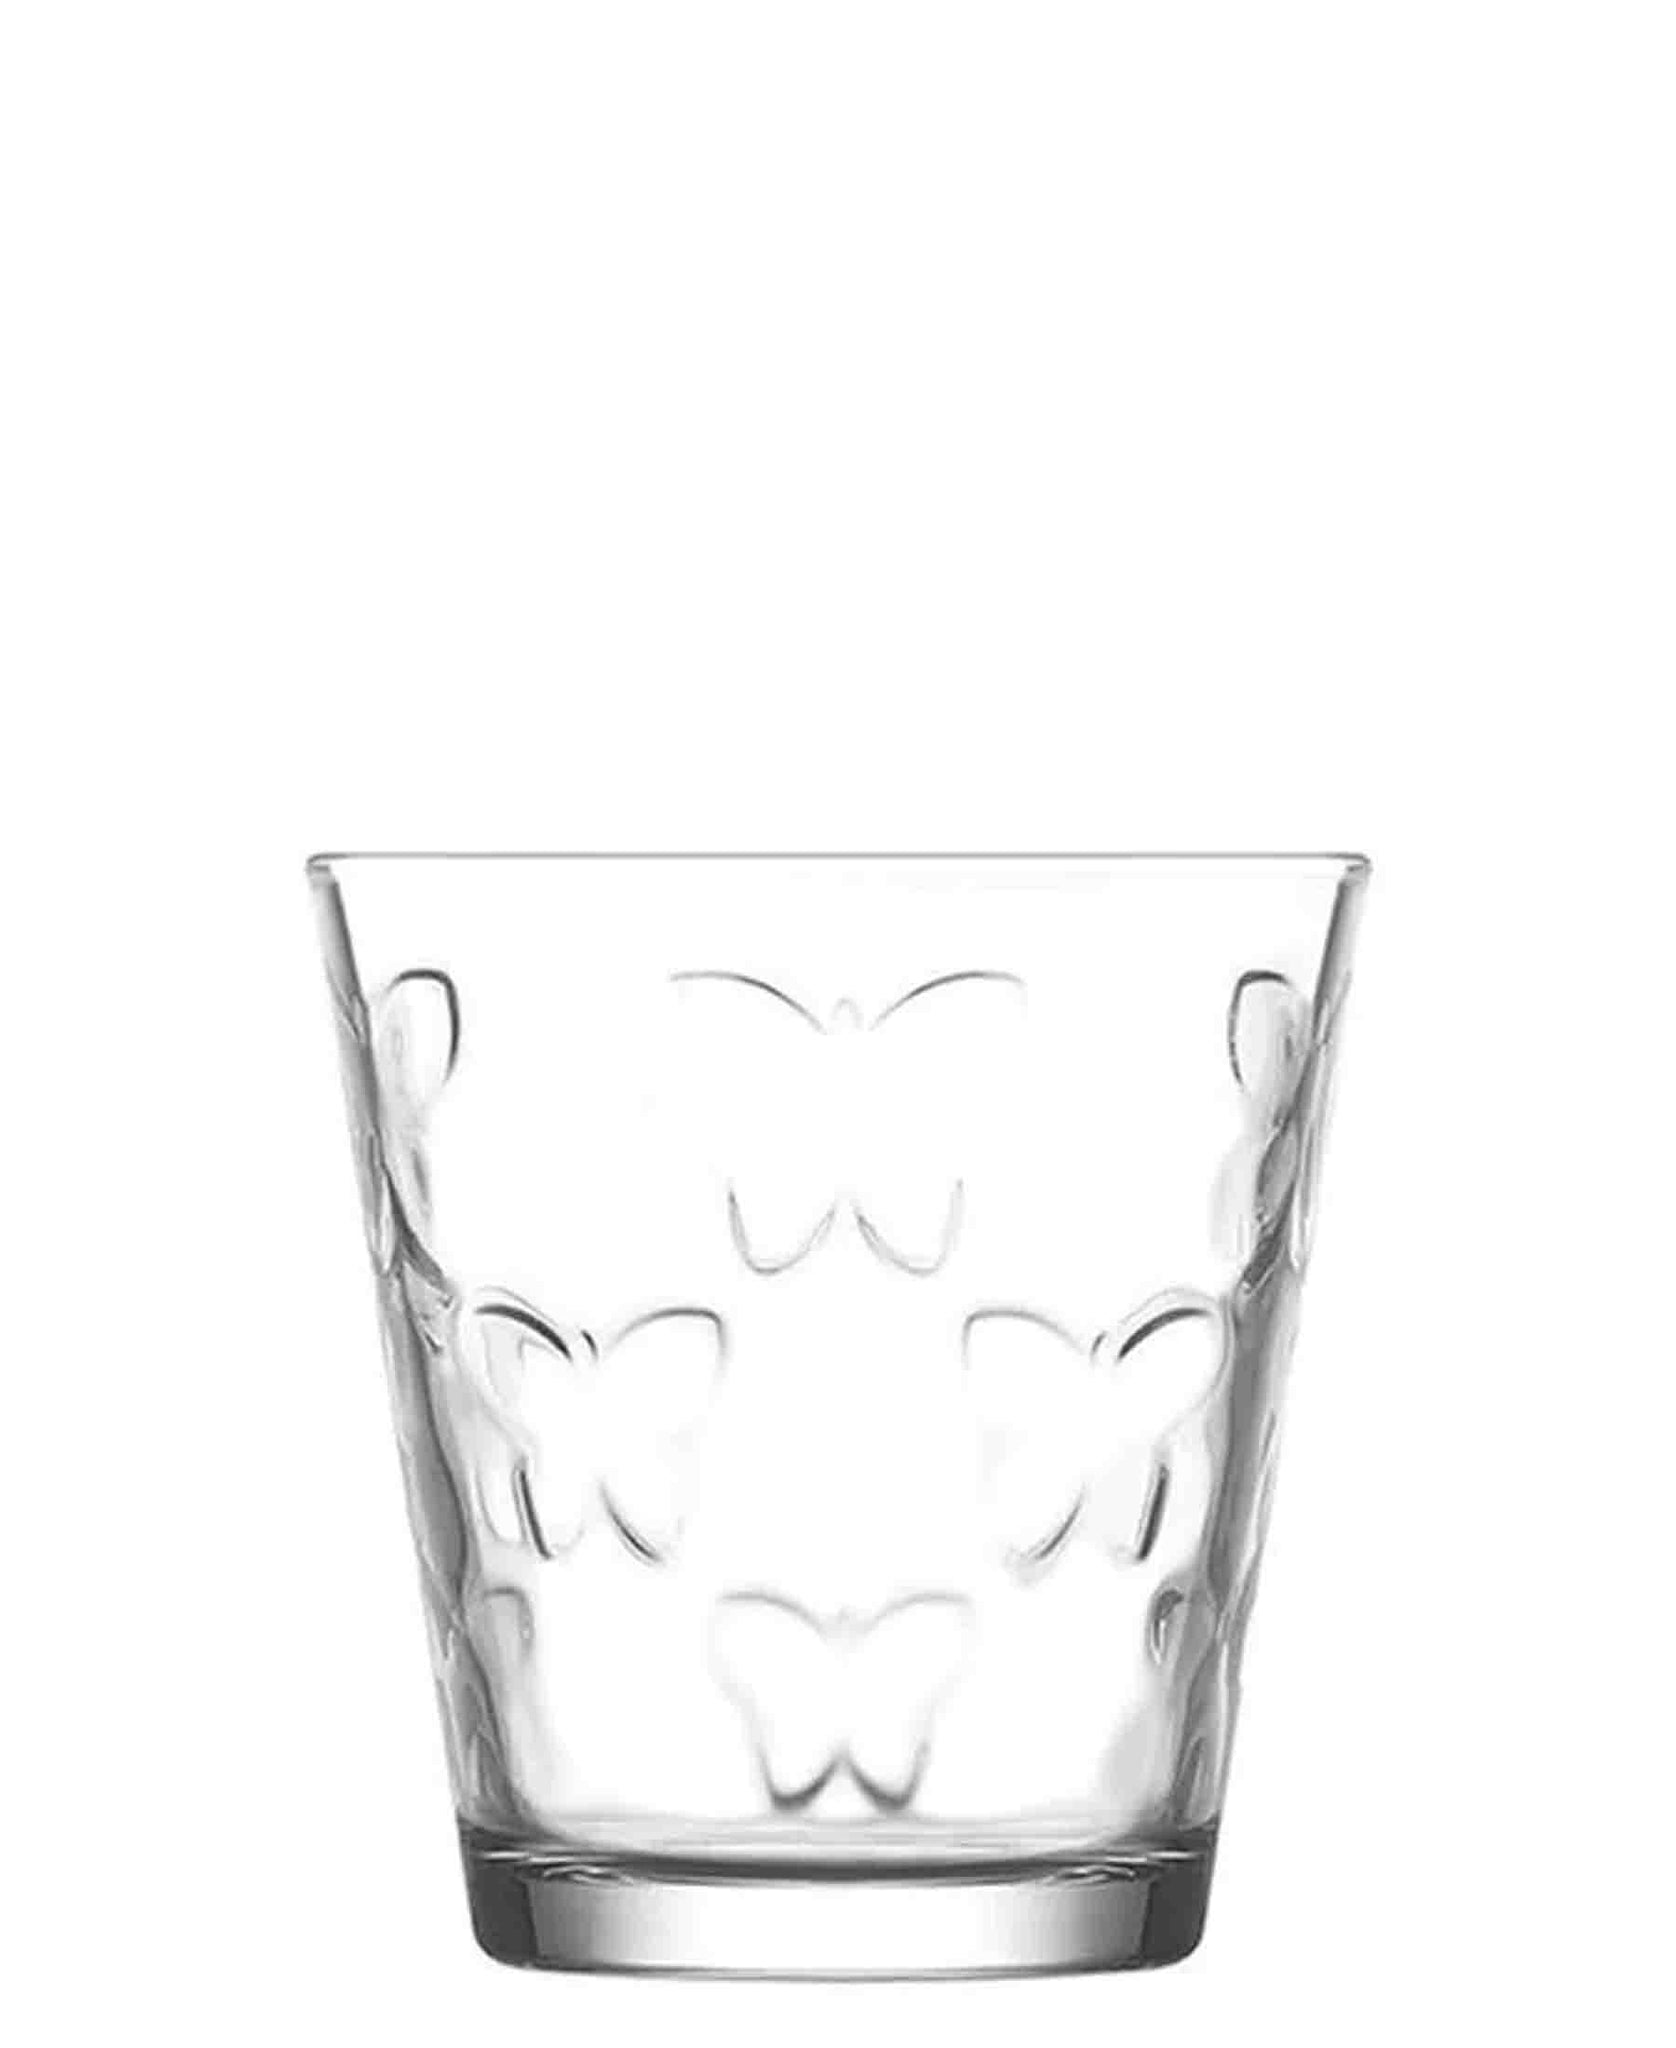 LAV 6 Piece 255ml Kelebek Whiskey Glass Set - Clear